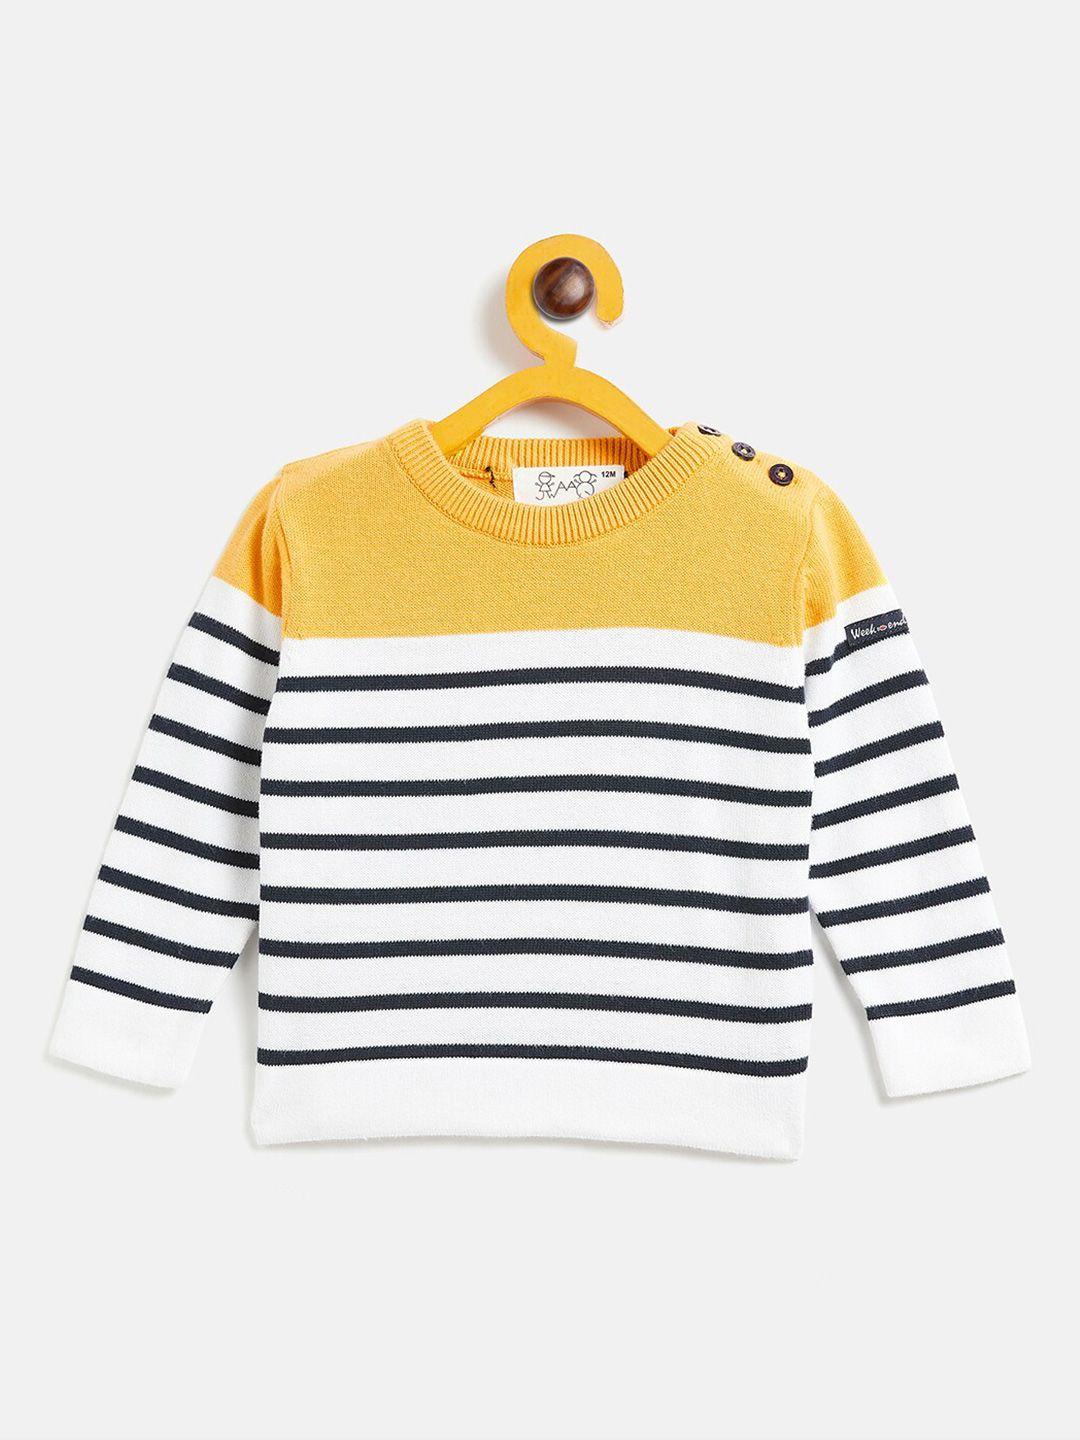 jwaaq unisex kids yellow & white striped pullover